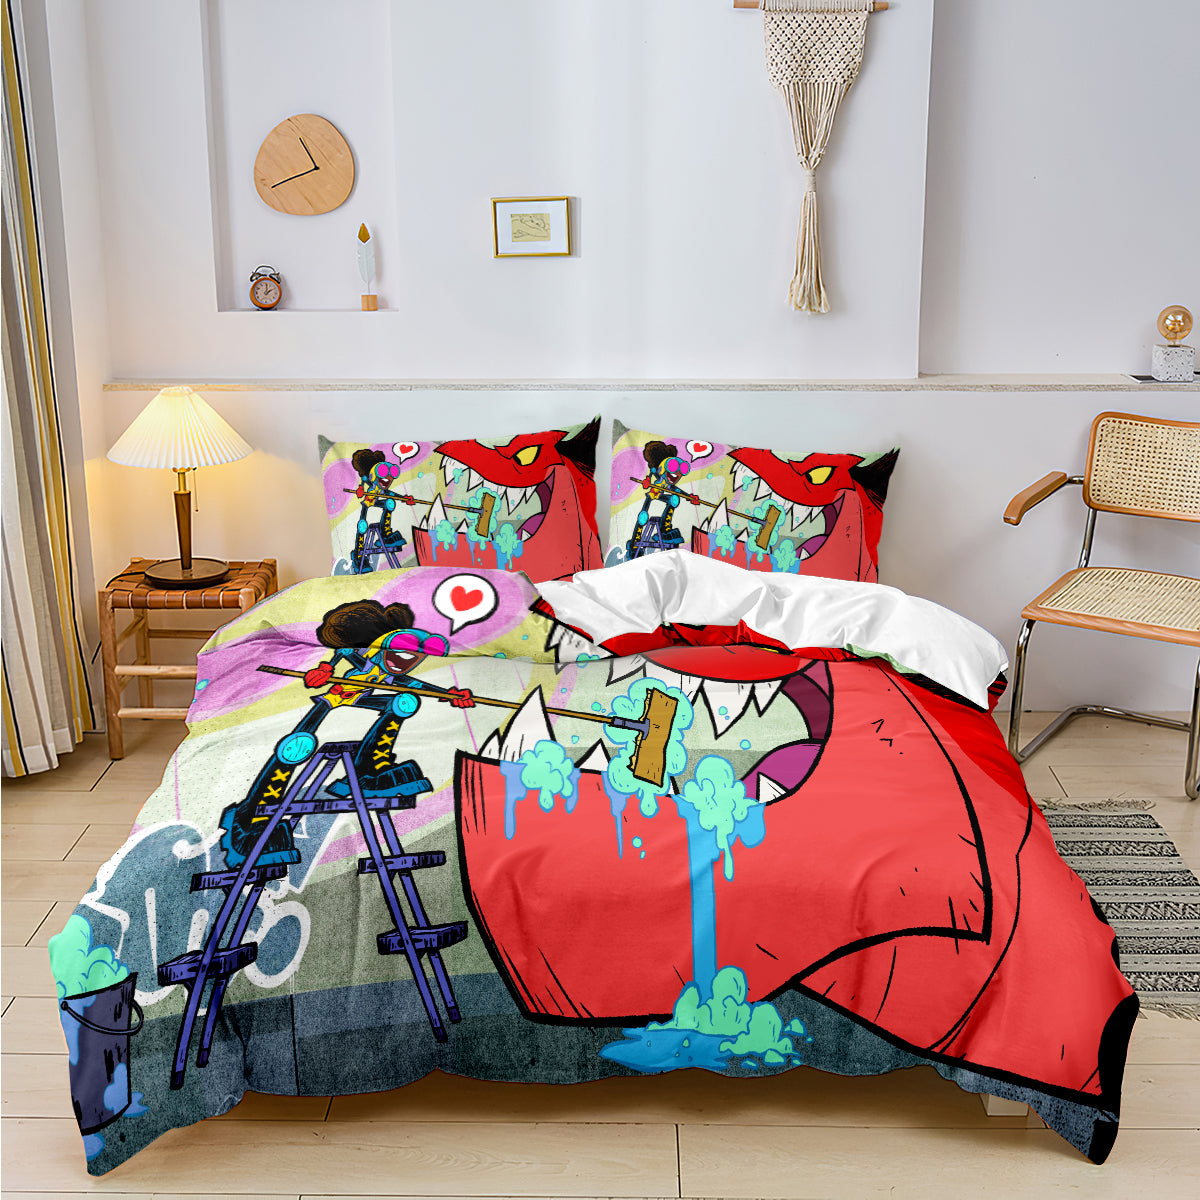 Moon Girl and Devil Dinosaur #6 3D Printed Duvet Cover Quilt Cover Pillowcase Bedding Set Bed Linen Home Decor